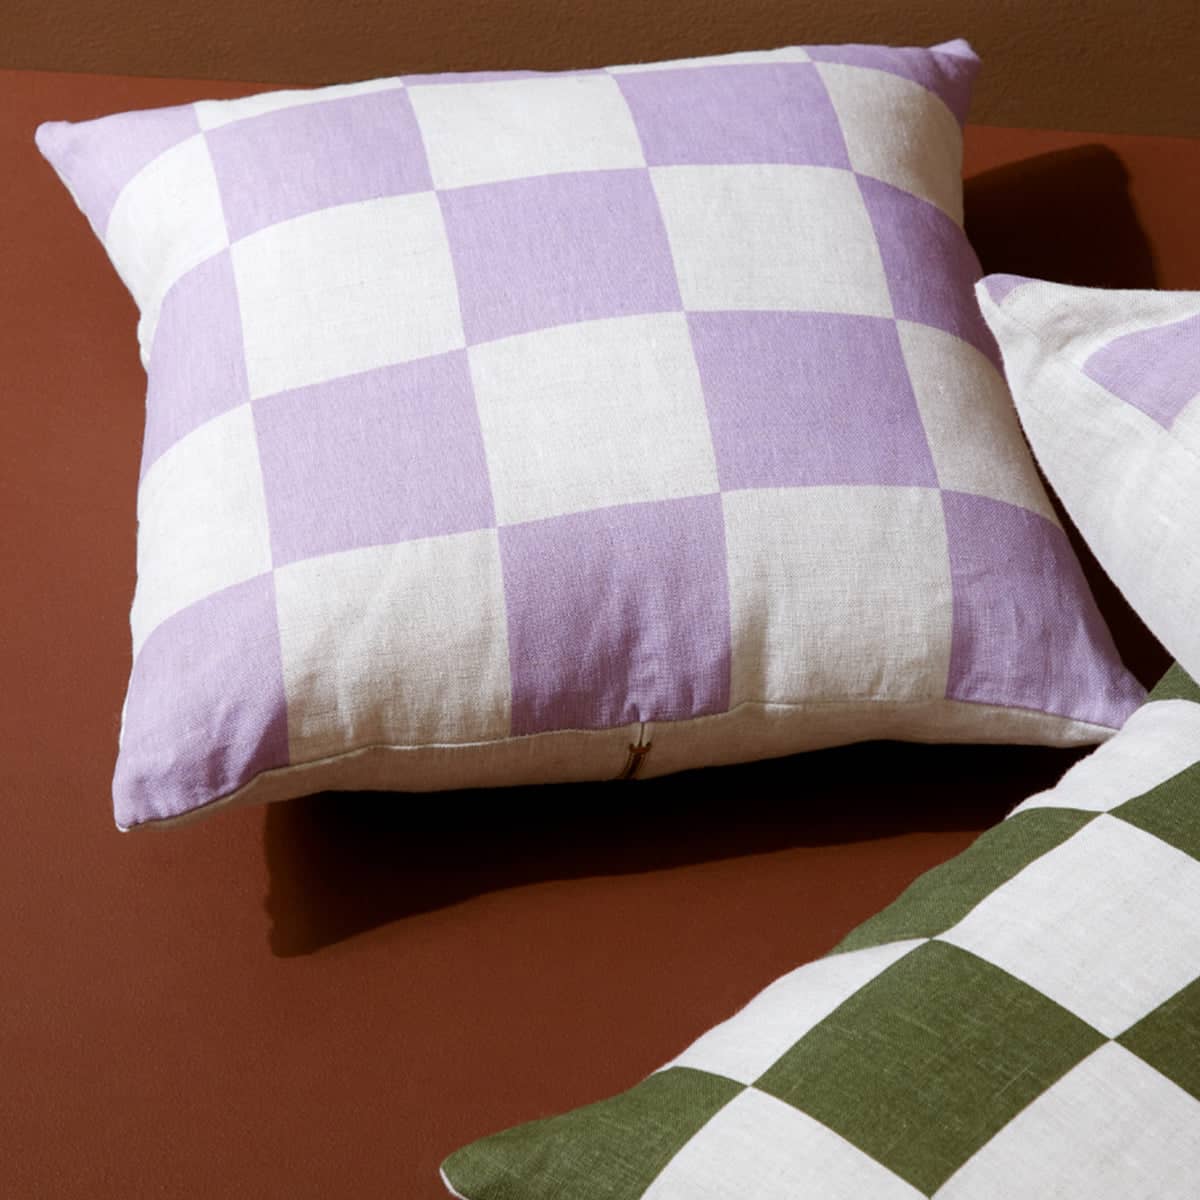 Big Check Square Cushion - Lavender